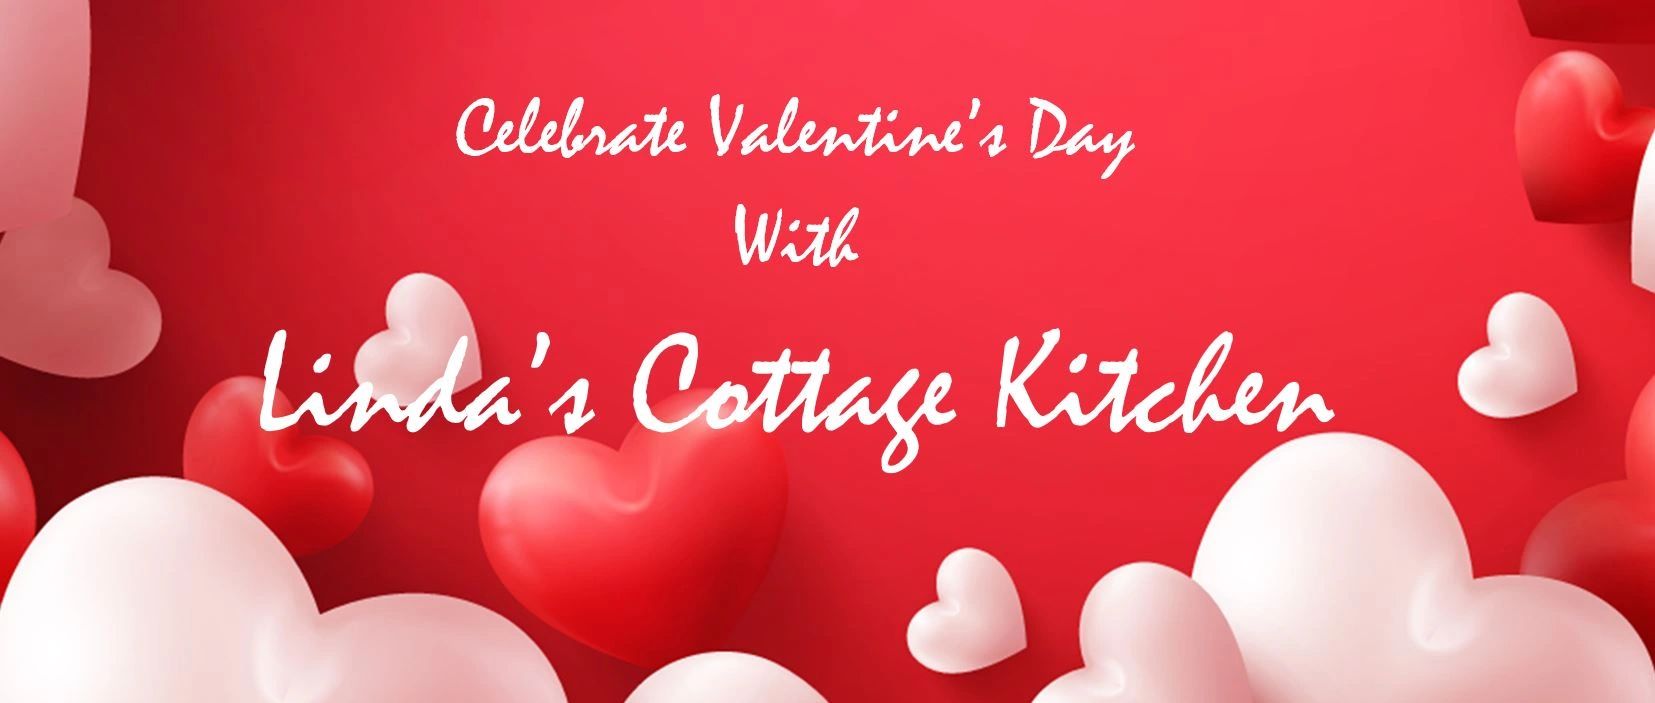 Celebrate Valentines' Day With Linda's Cottage Kitchen